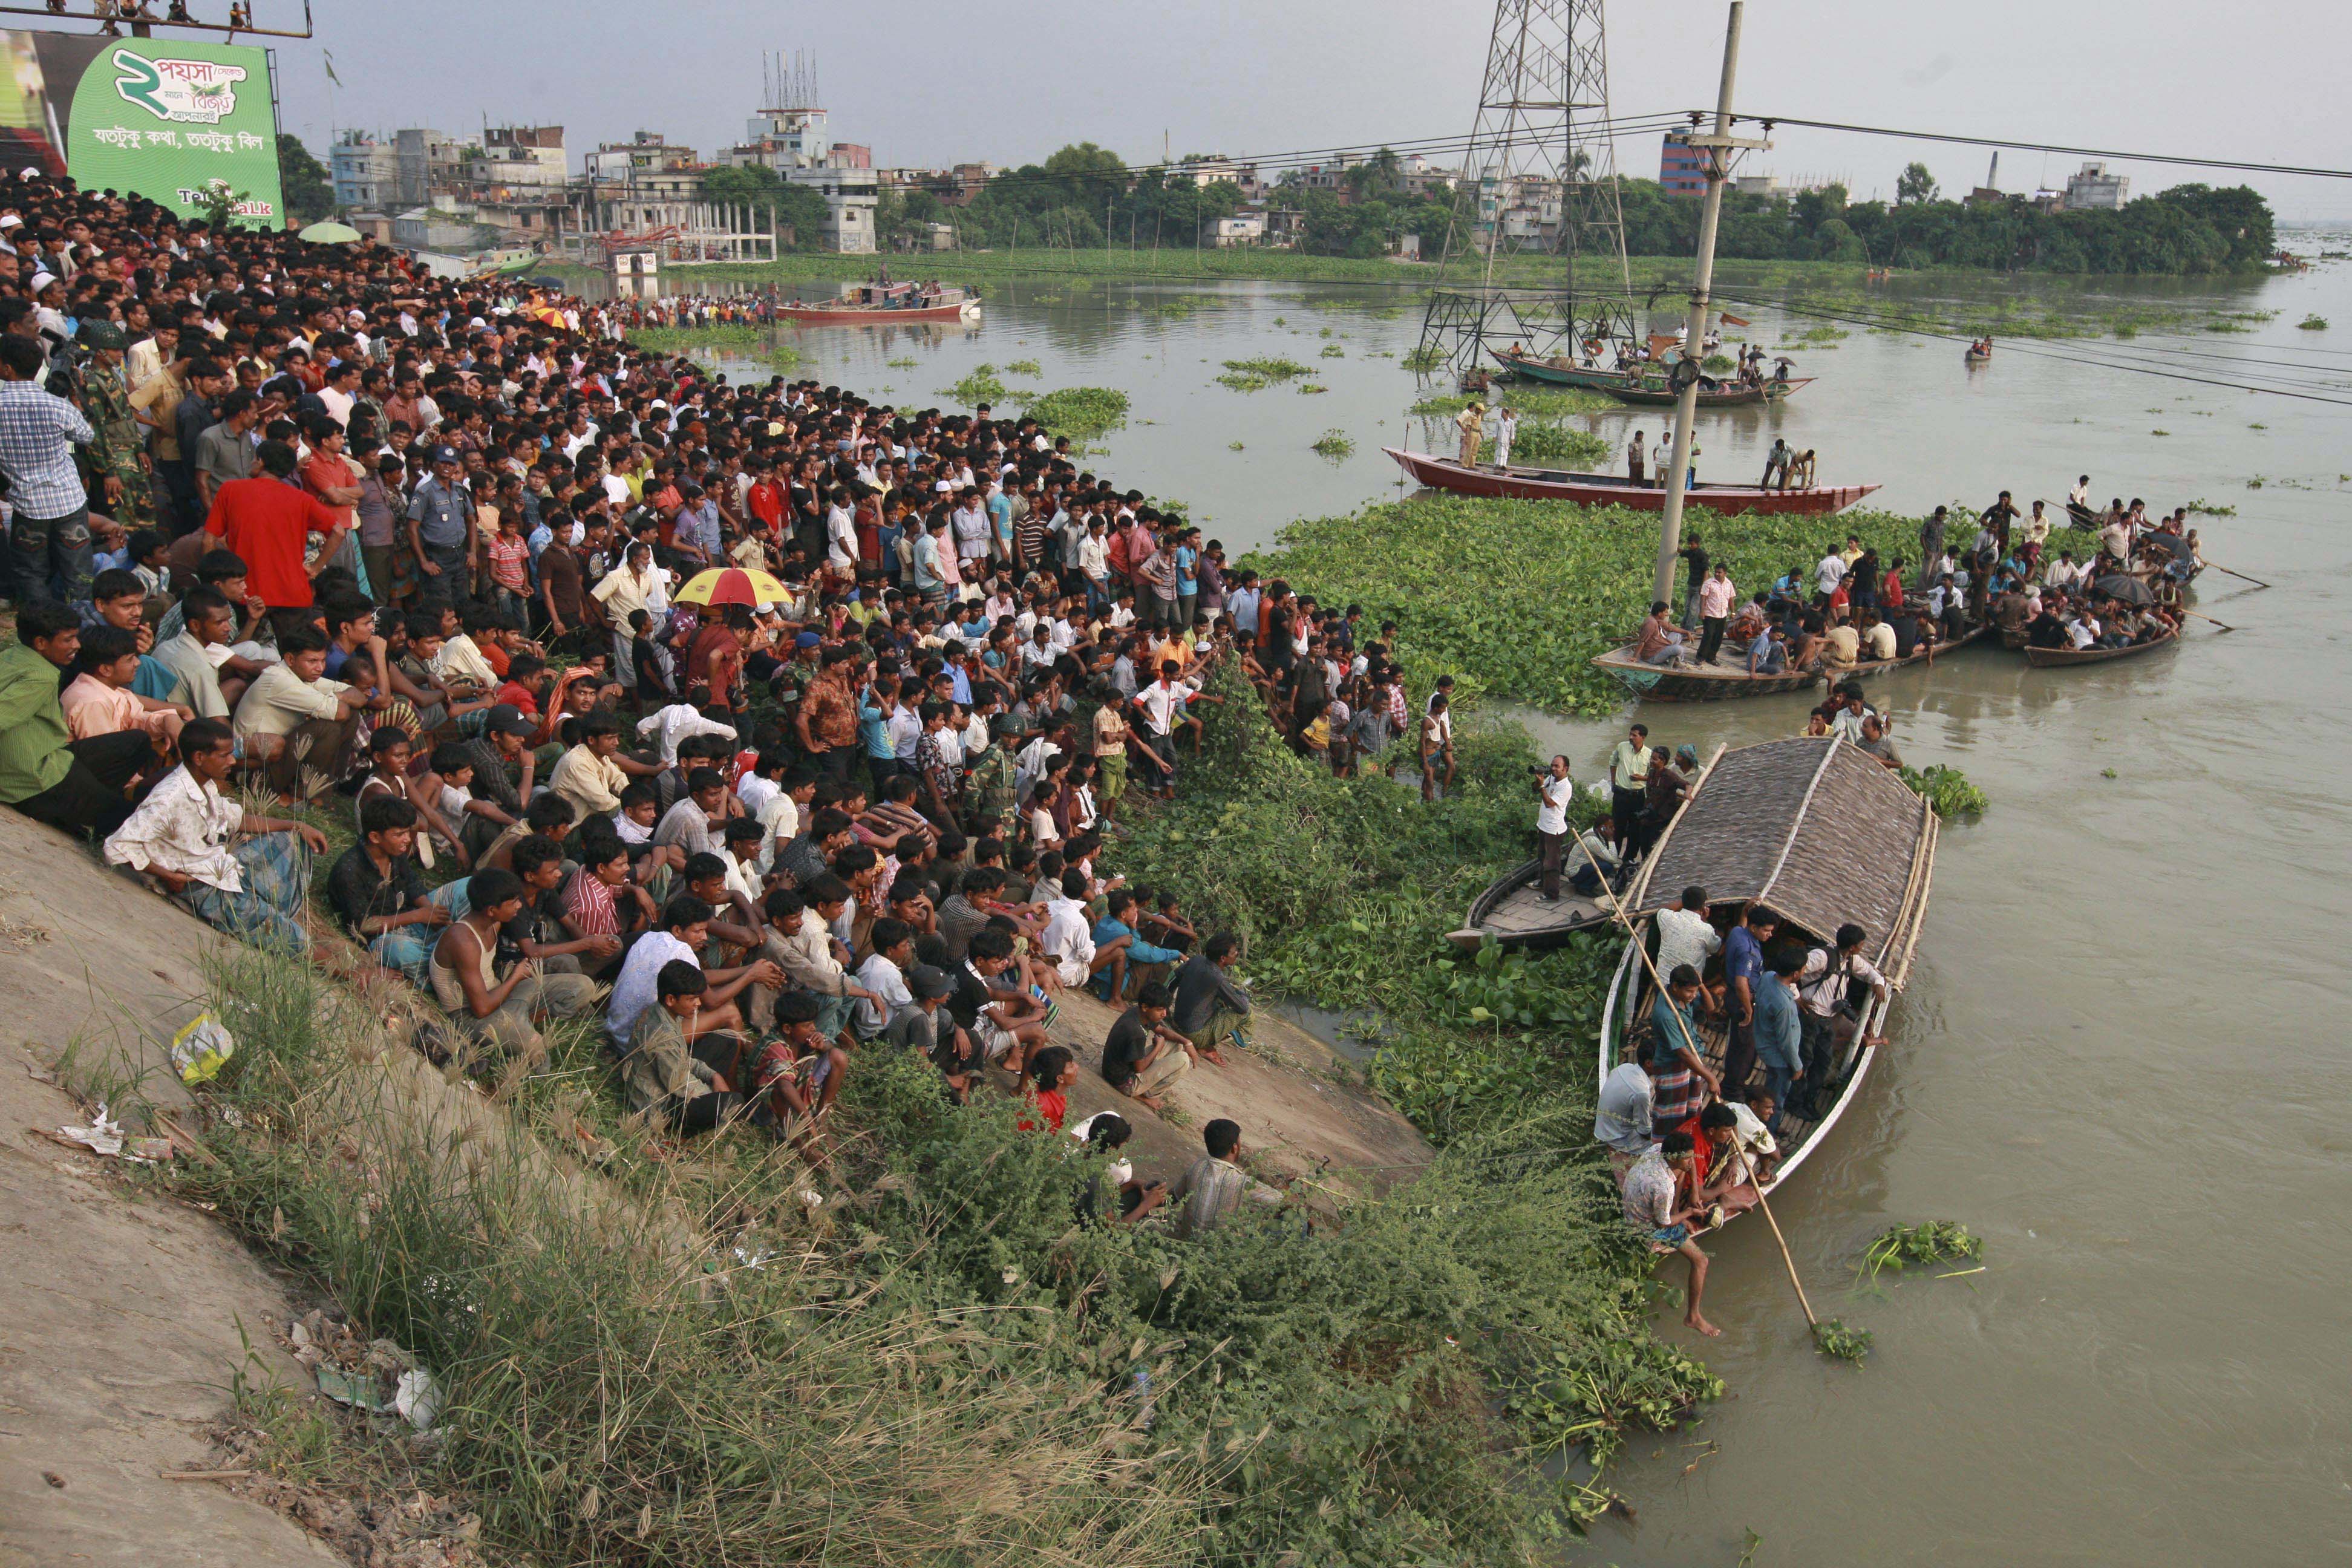 regn, Olycka, Vatten, Flod, Buss, Bangladesh